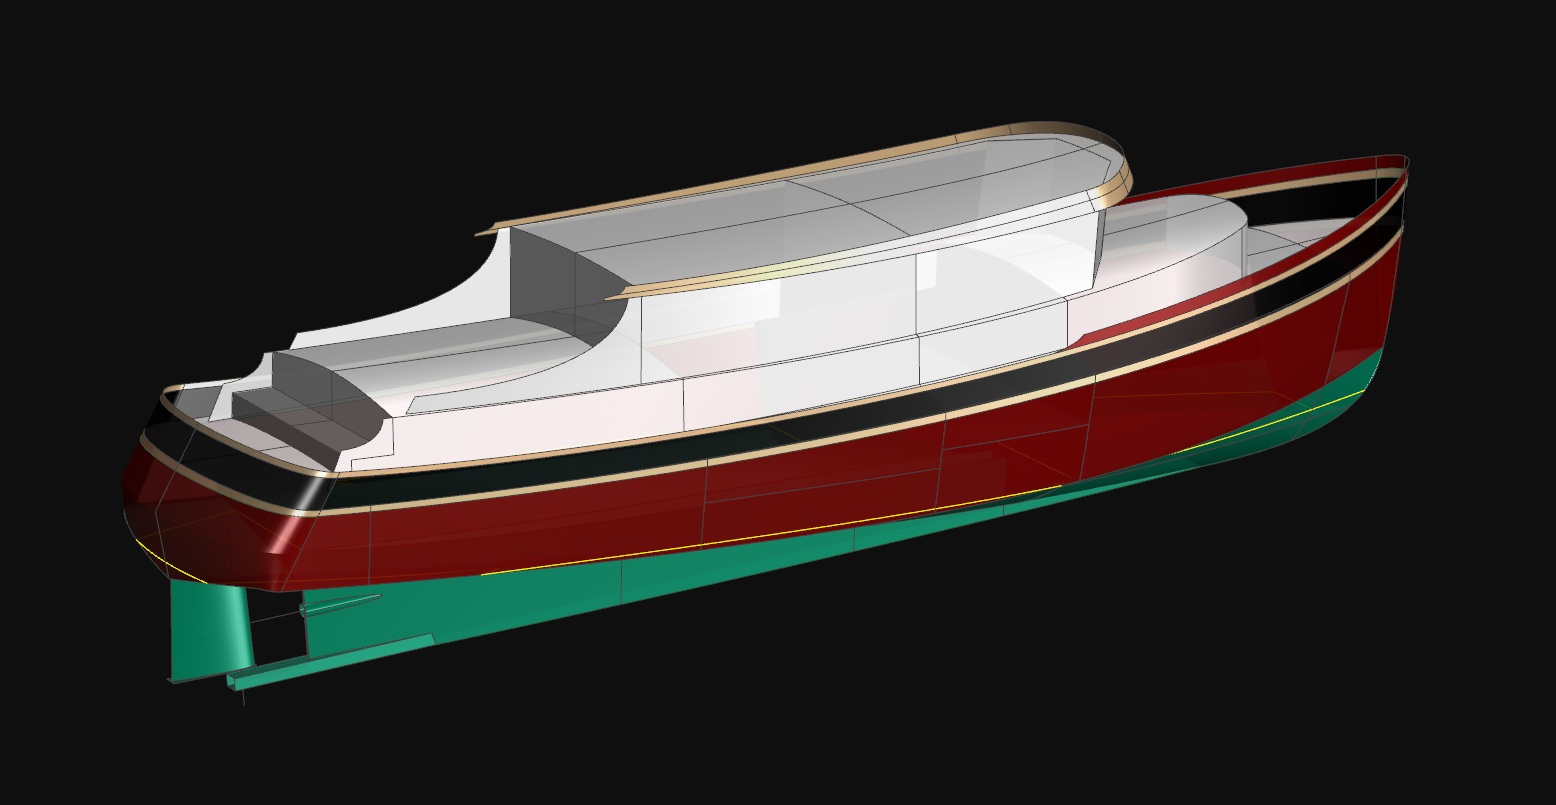 The 48' Fast Trawler Yacht - RHUMB RUNNER - Kasten Marine Design, Inc.